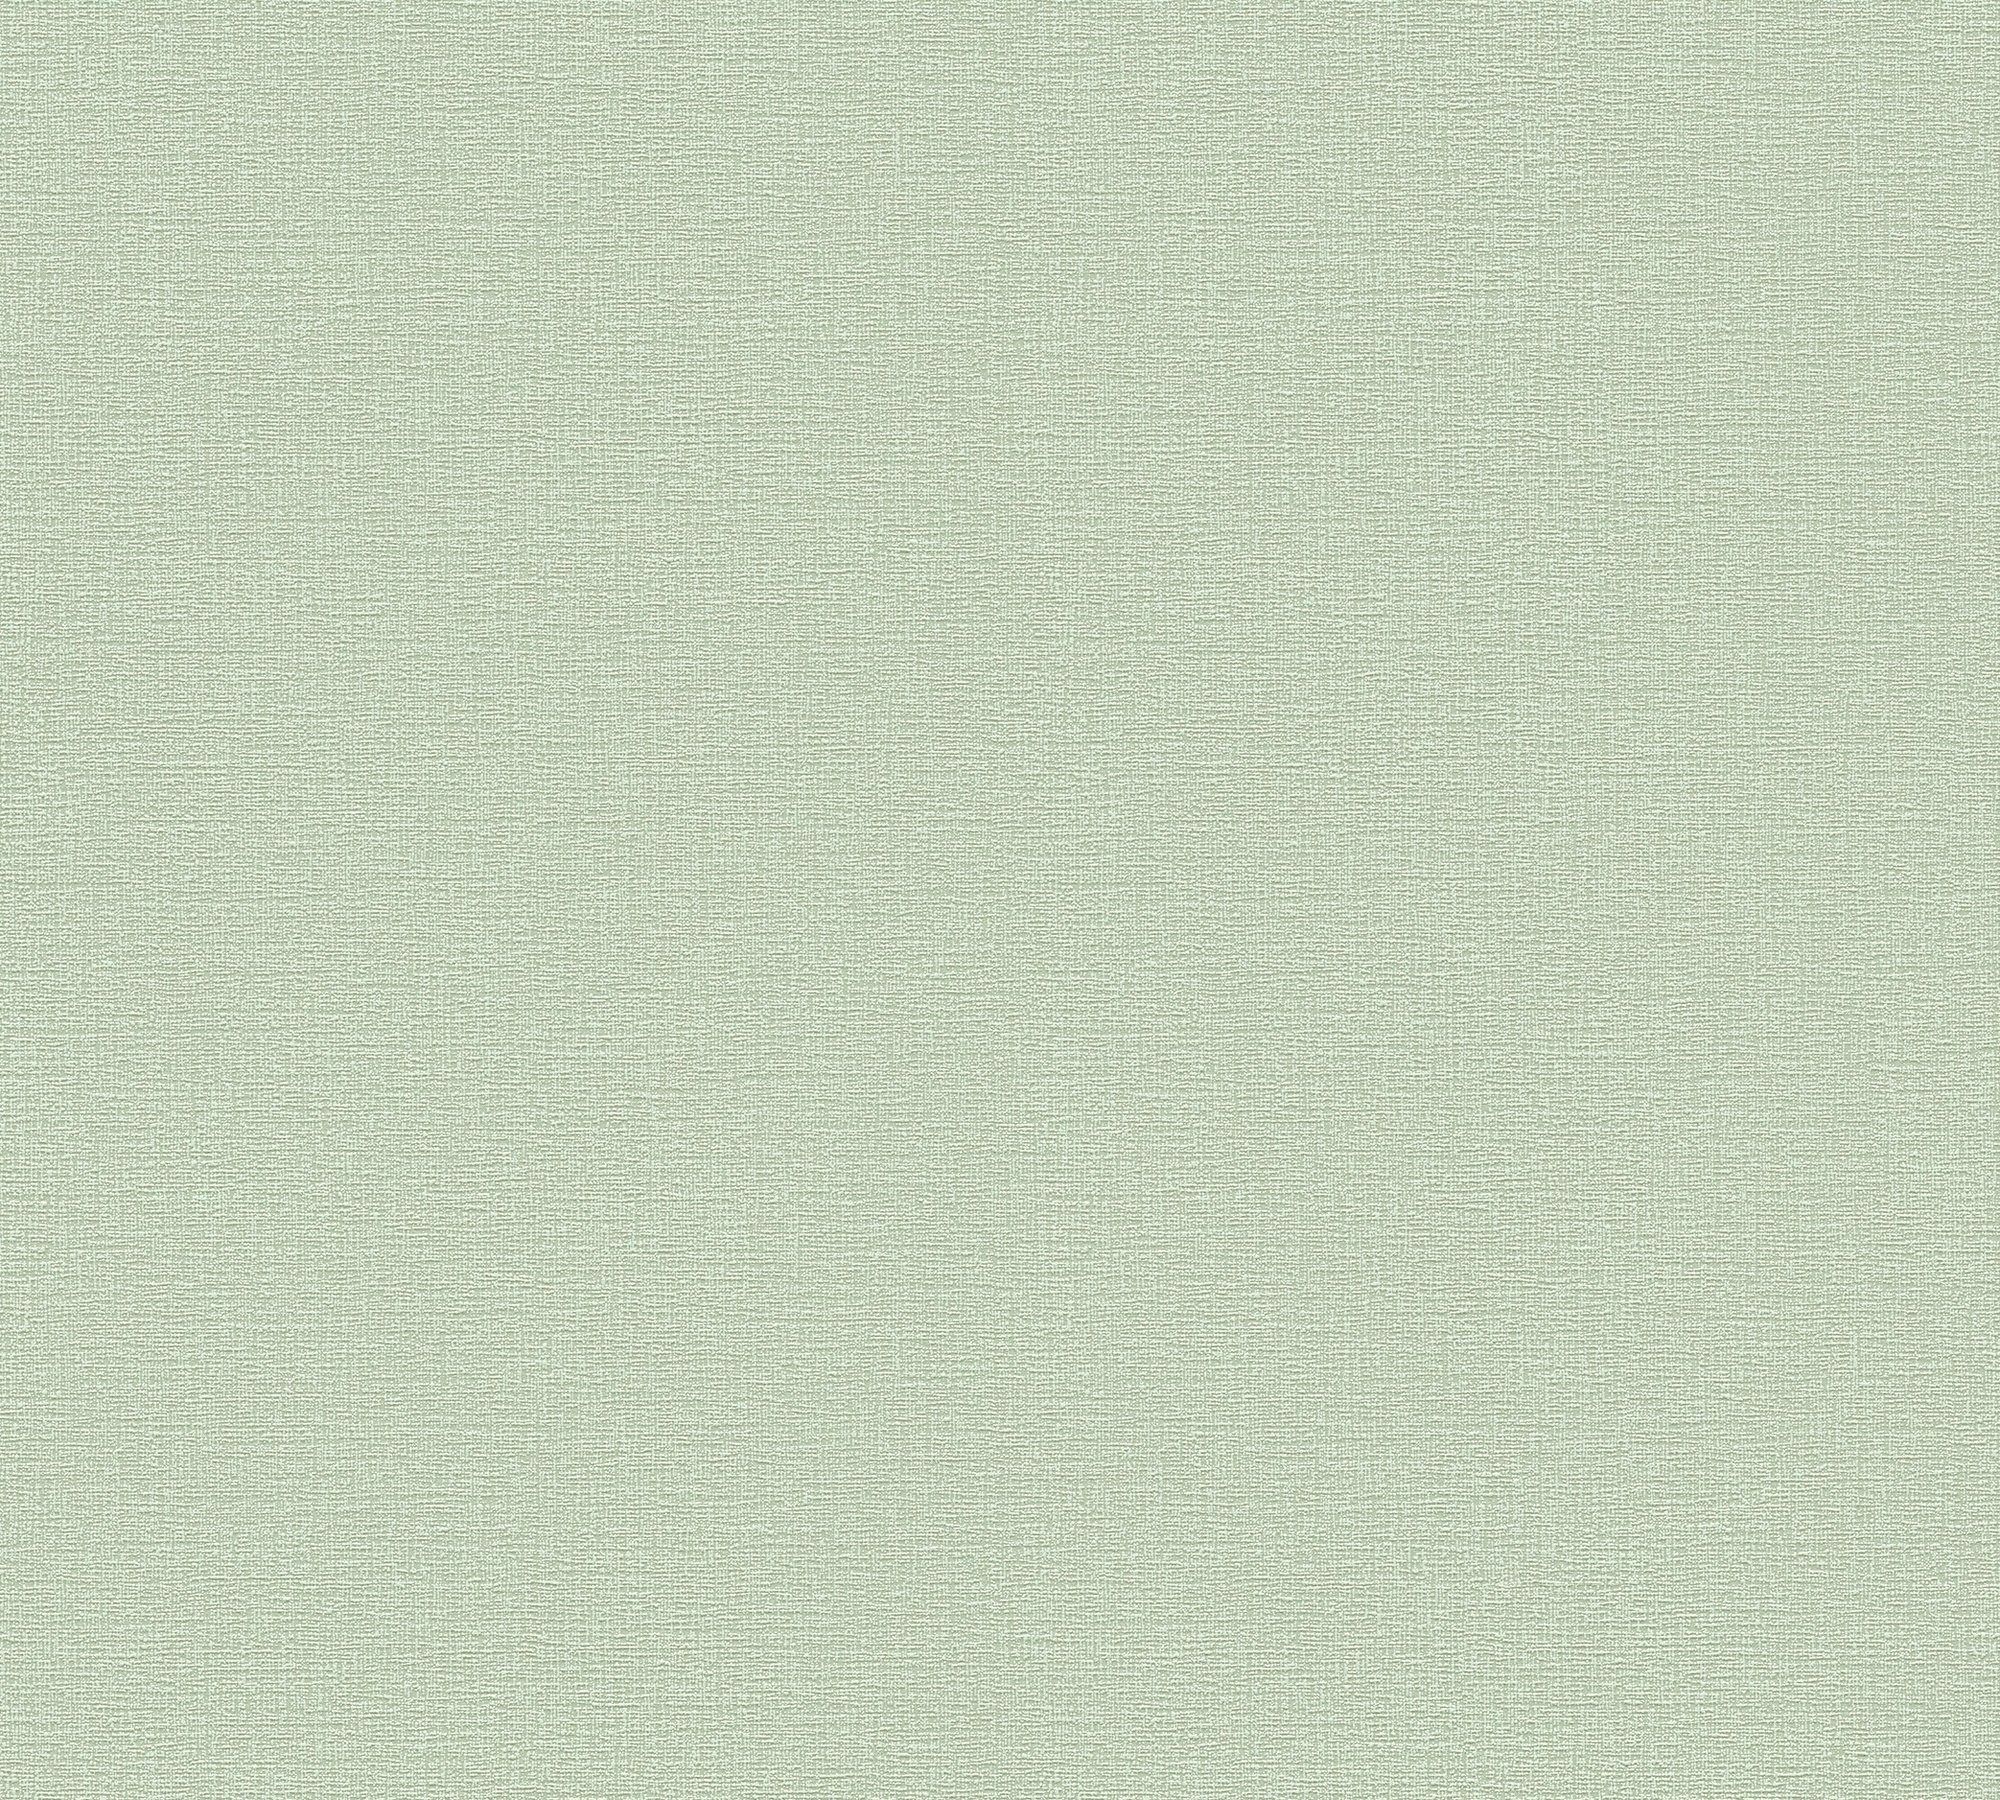 Vliestapete Tapete strukturiert, Création A.S. Einfarbig Uni uni, Uni, grün/hellgrün Greenery